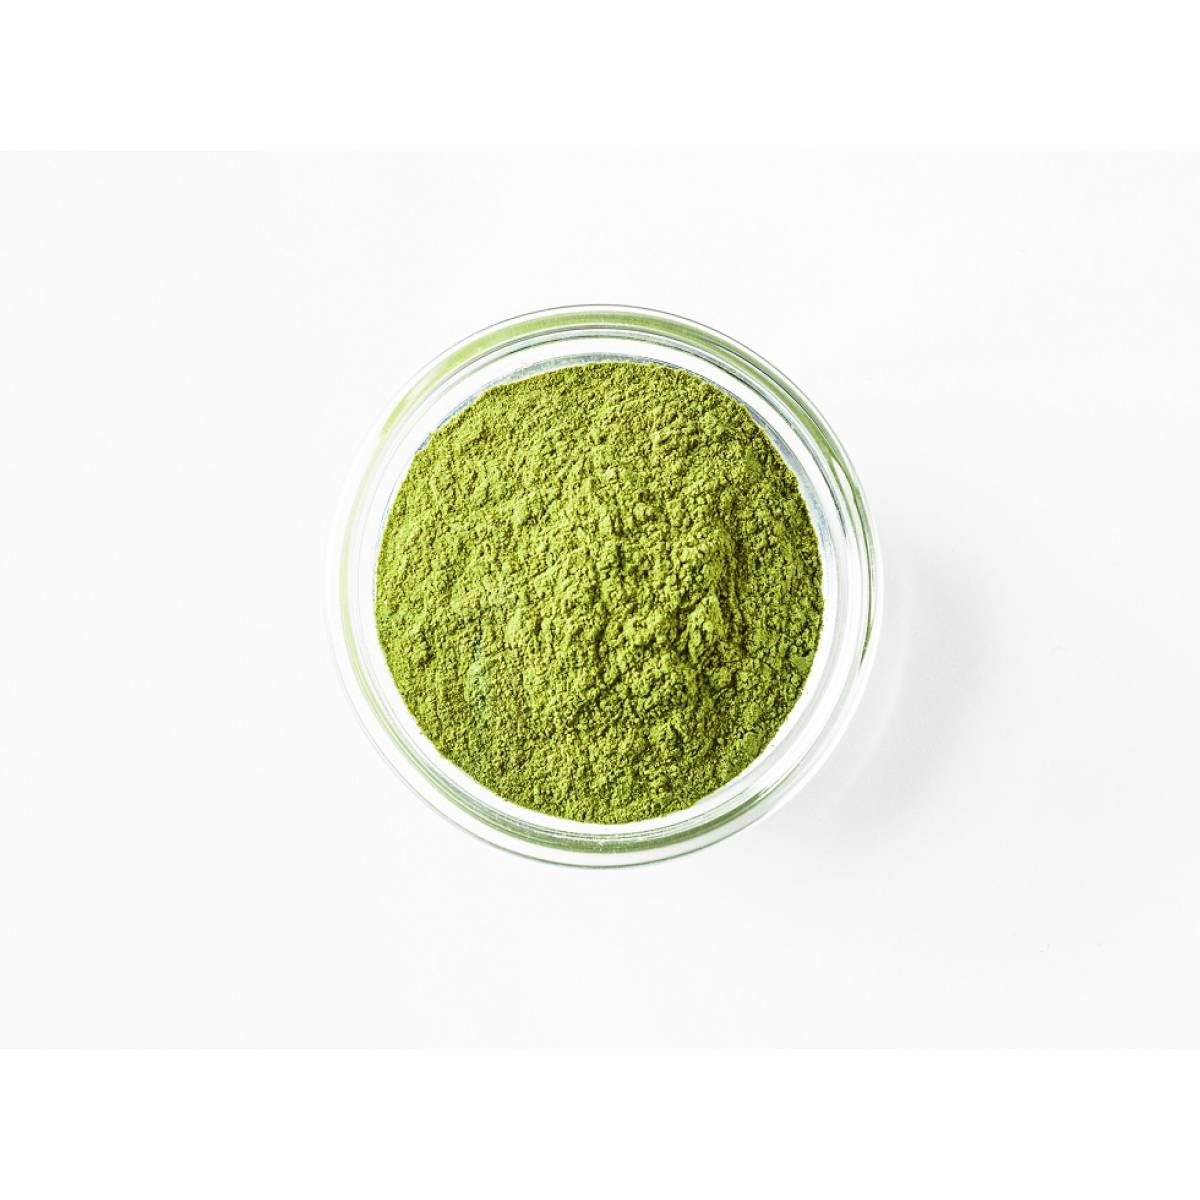 Glass with Green Tea Powder